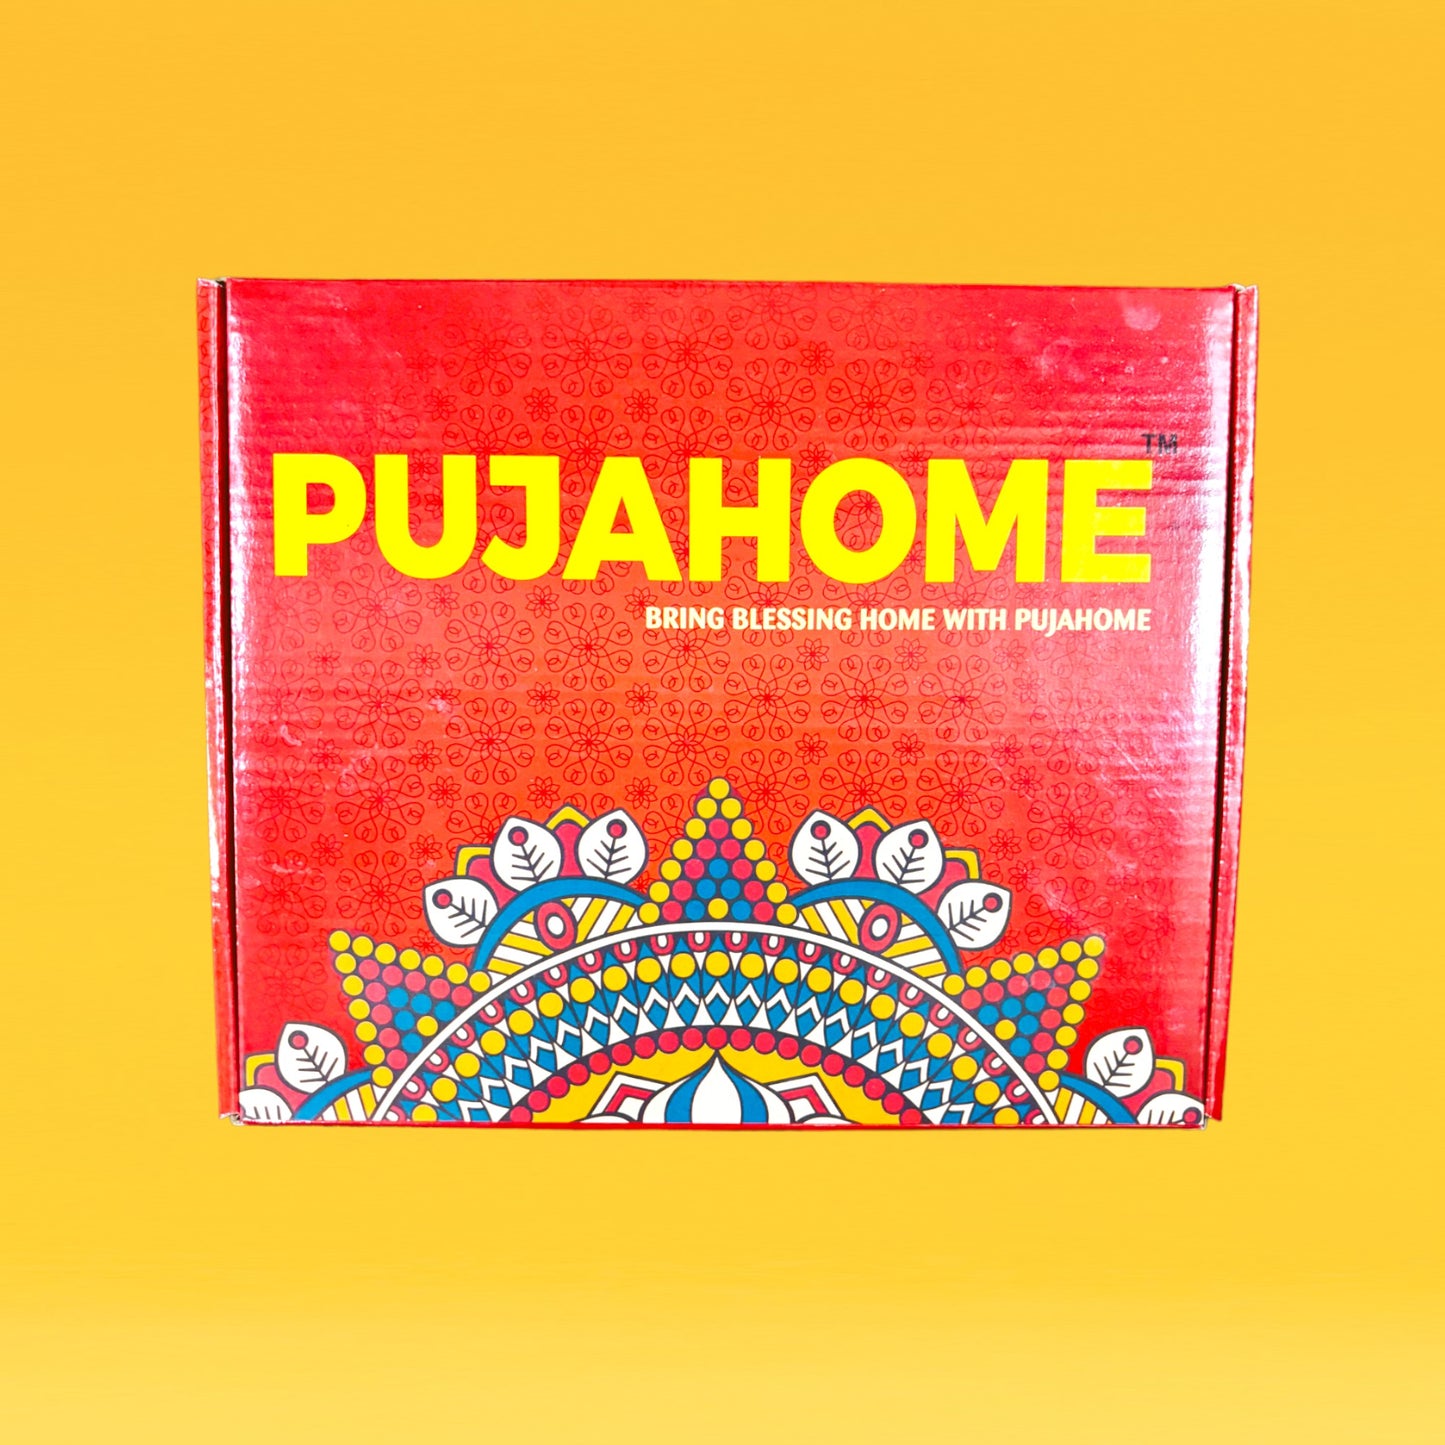 Pujahome Rudrabhishek Samagri Kit for Shiv Puja (Includes 33 Items)